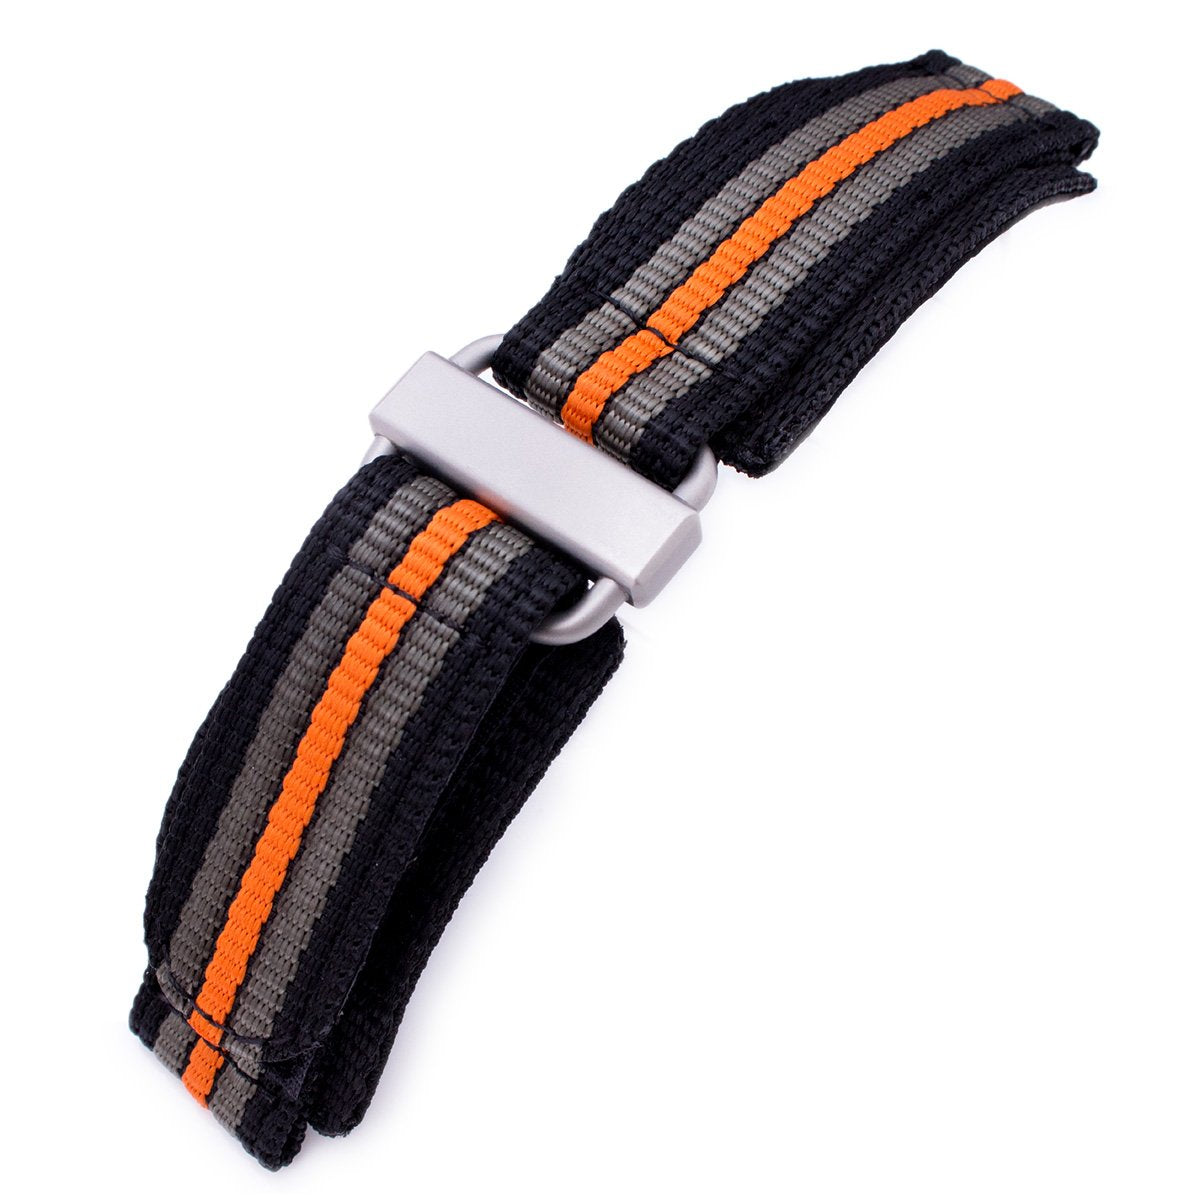 22mm MiLTAT Black Khaki &amp; Orange Stripes 3-D Nylon Velcro Fastener Watch Strap Sandblasted Buckle Strapcode Watch Bands